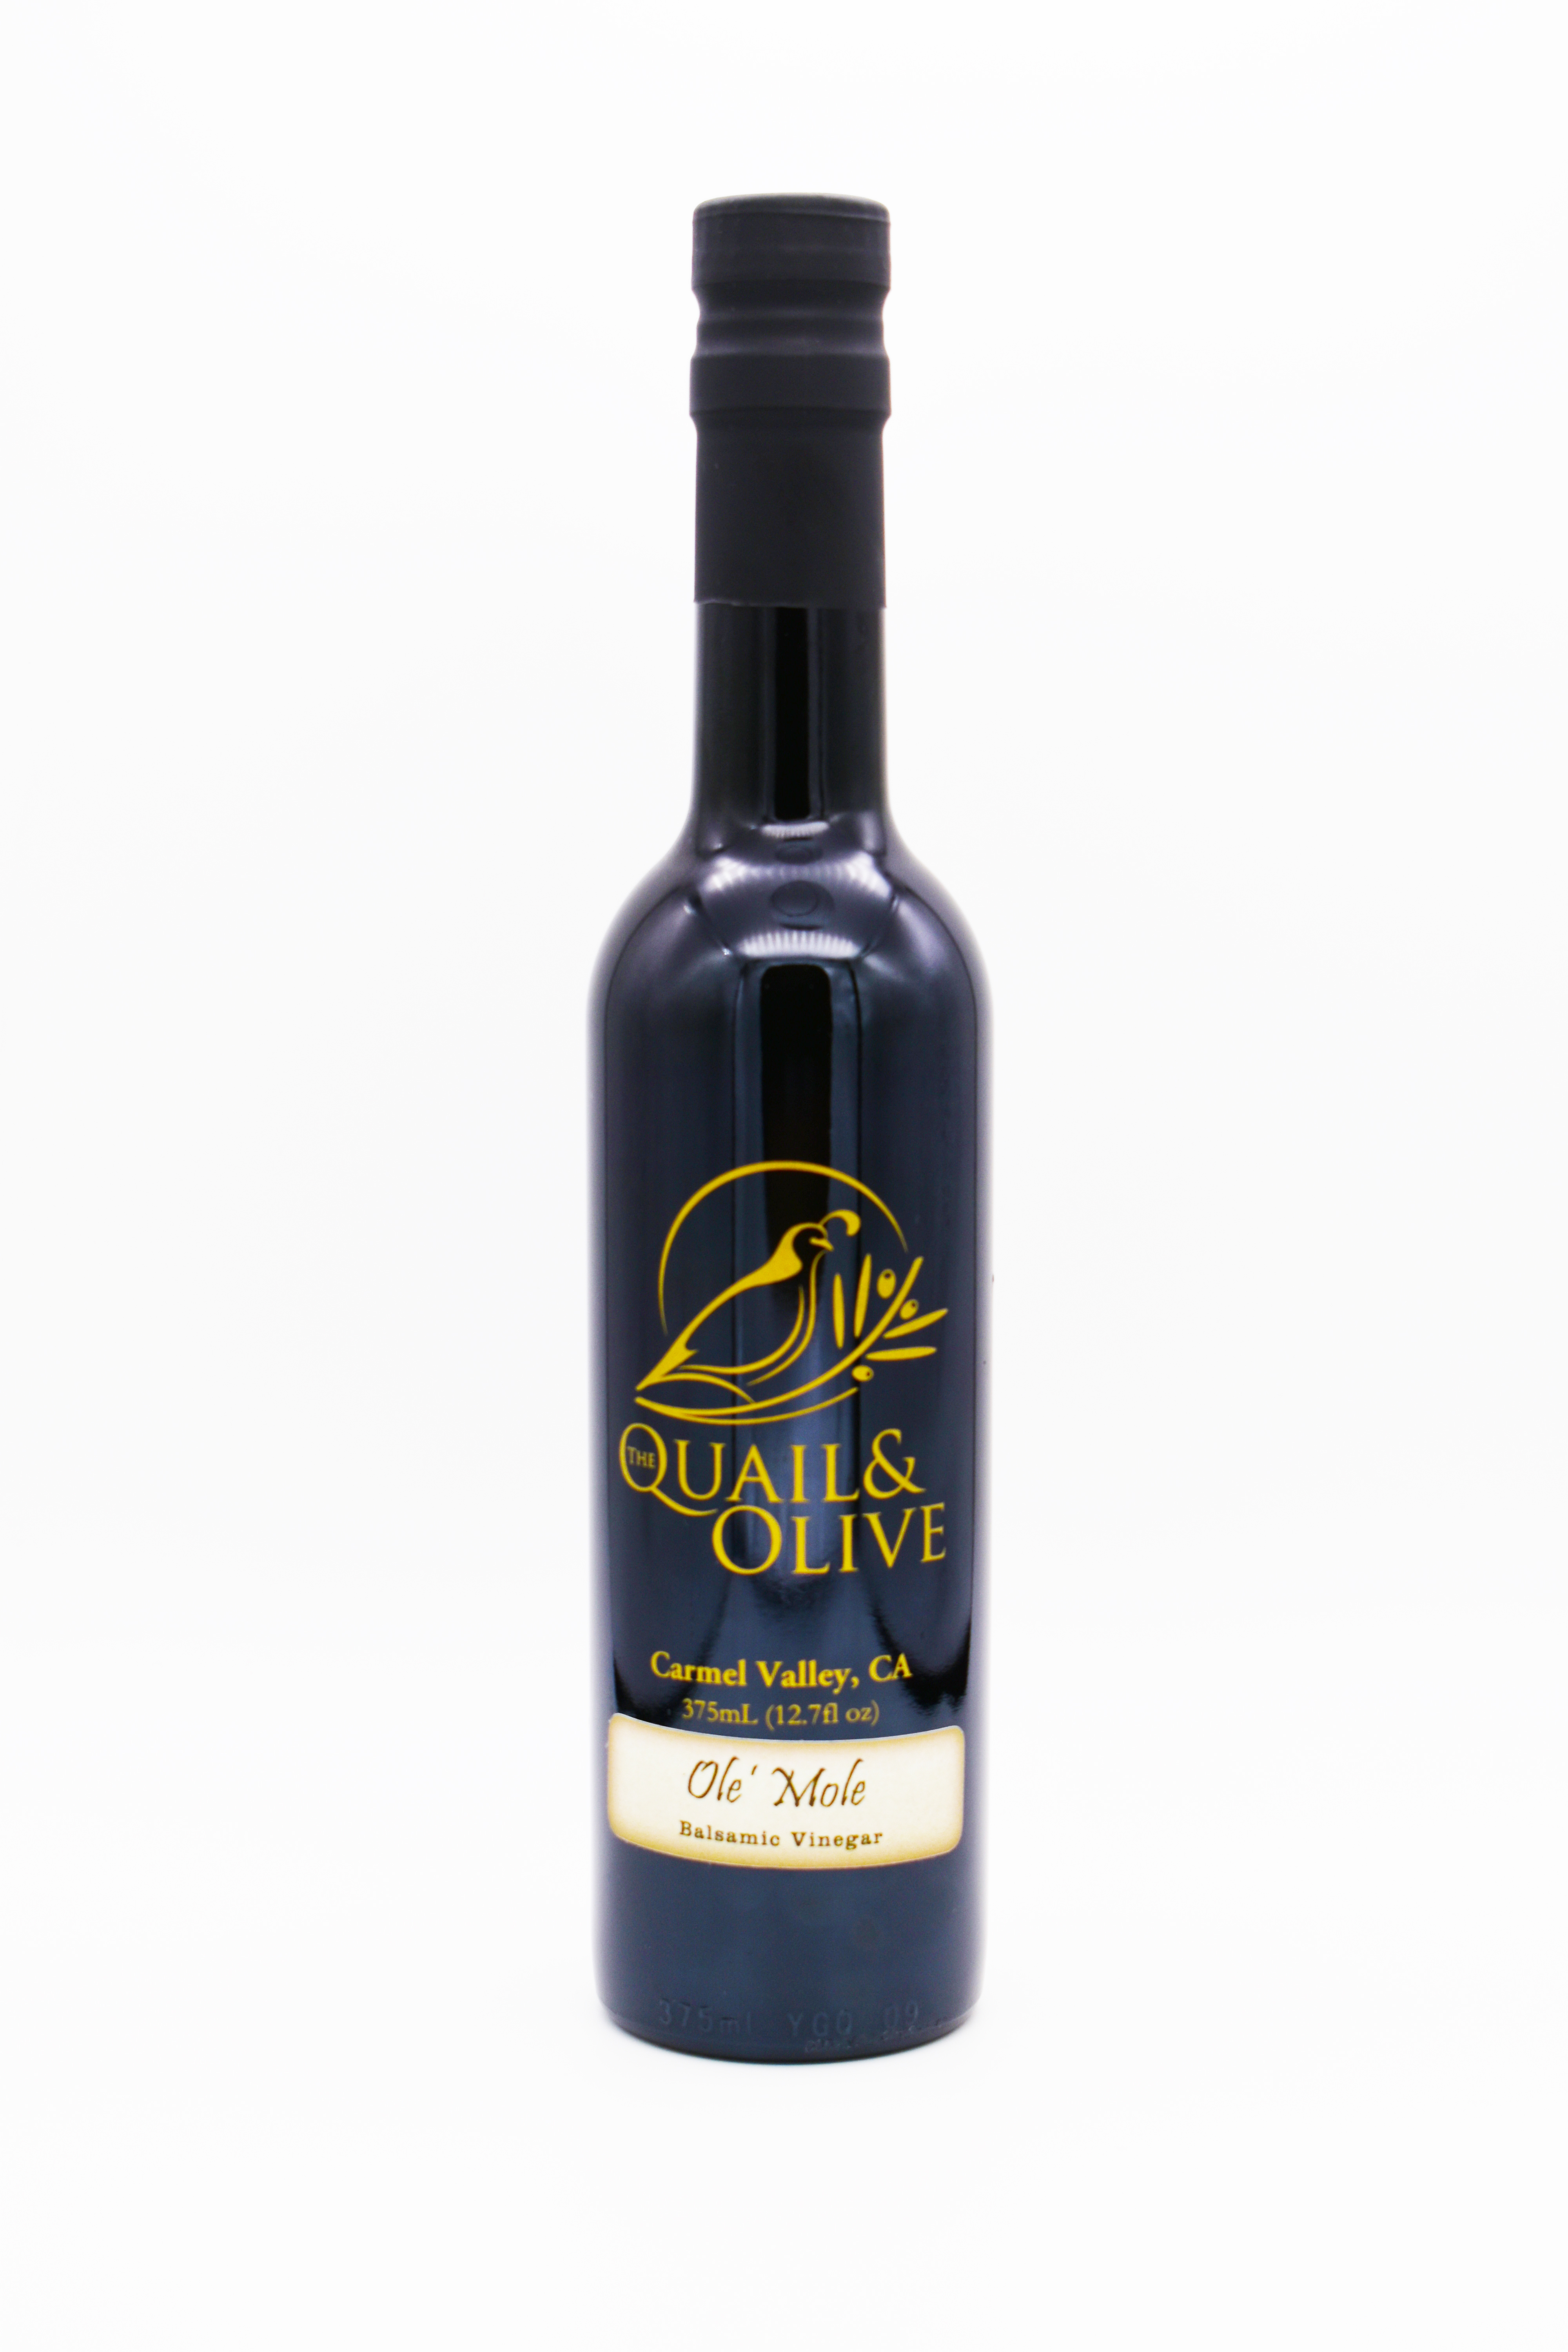 Product Image for Olé Mole Balsamic Vinegar